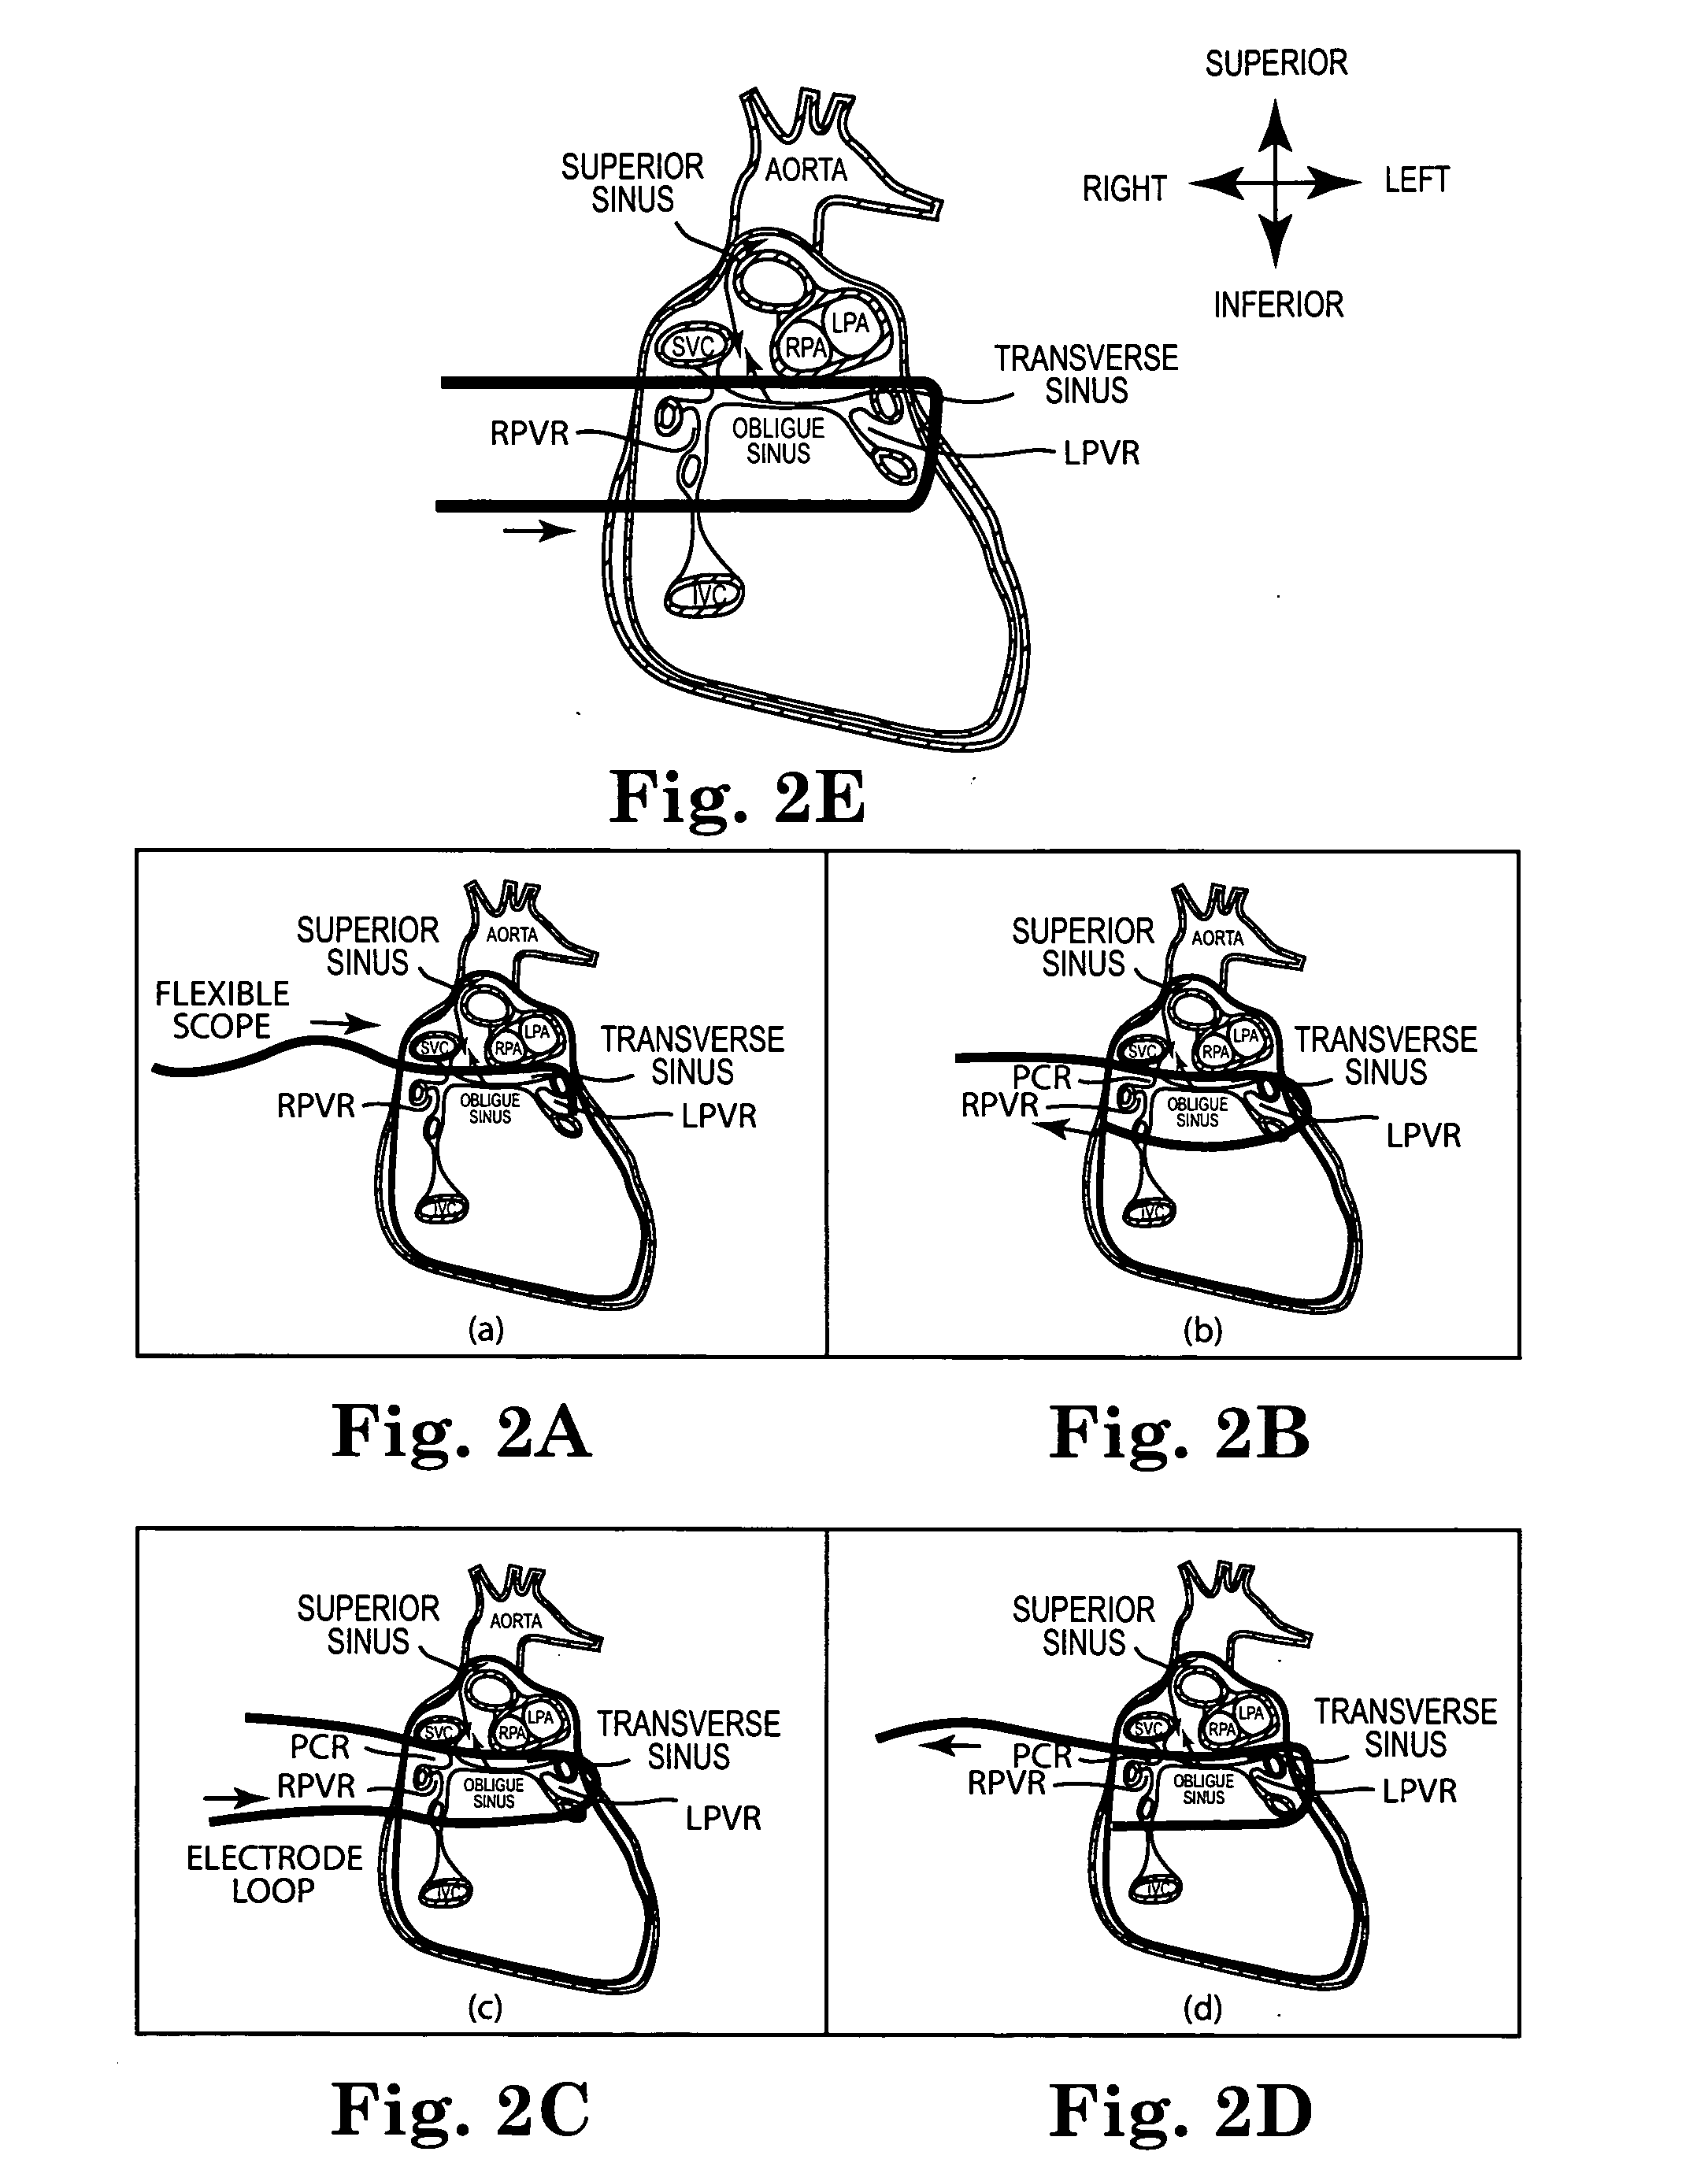 Loop ablation apparatus and method